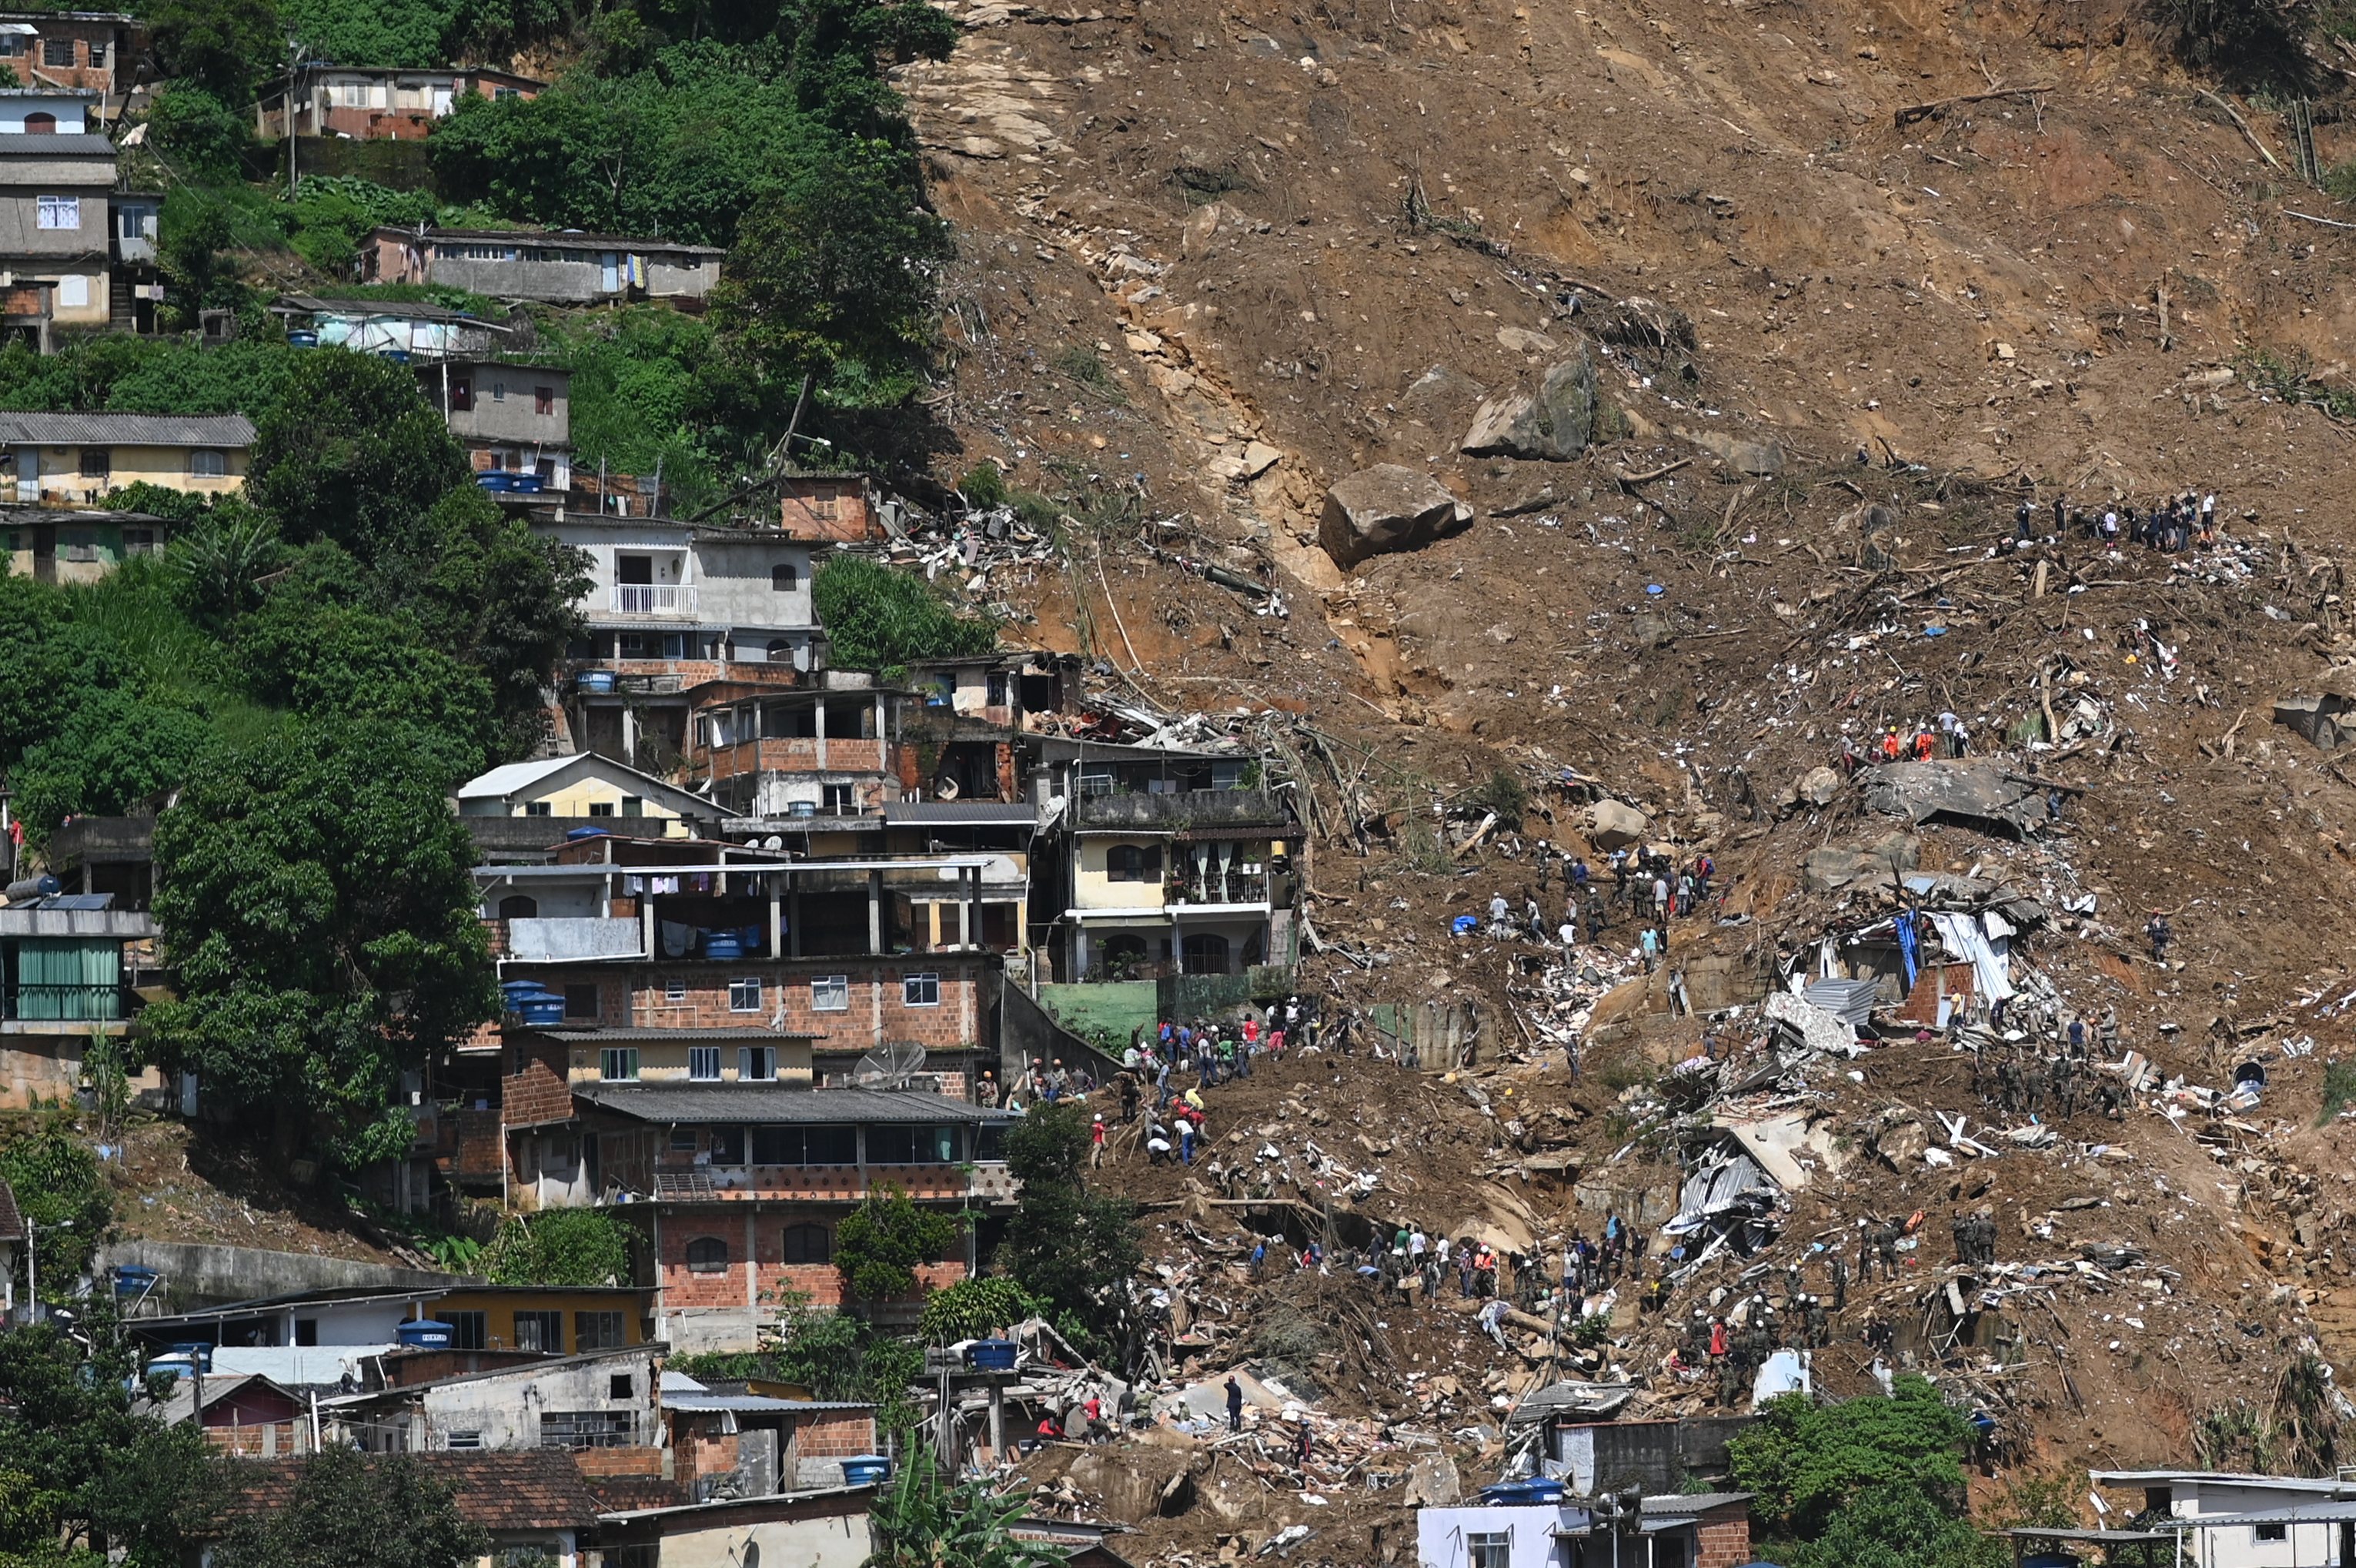 Deaths from rain and landslides near Rio de Janeiro